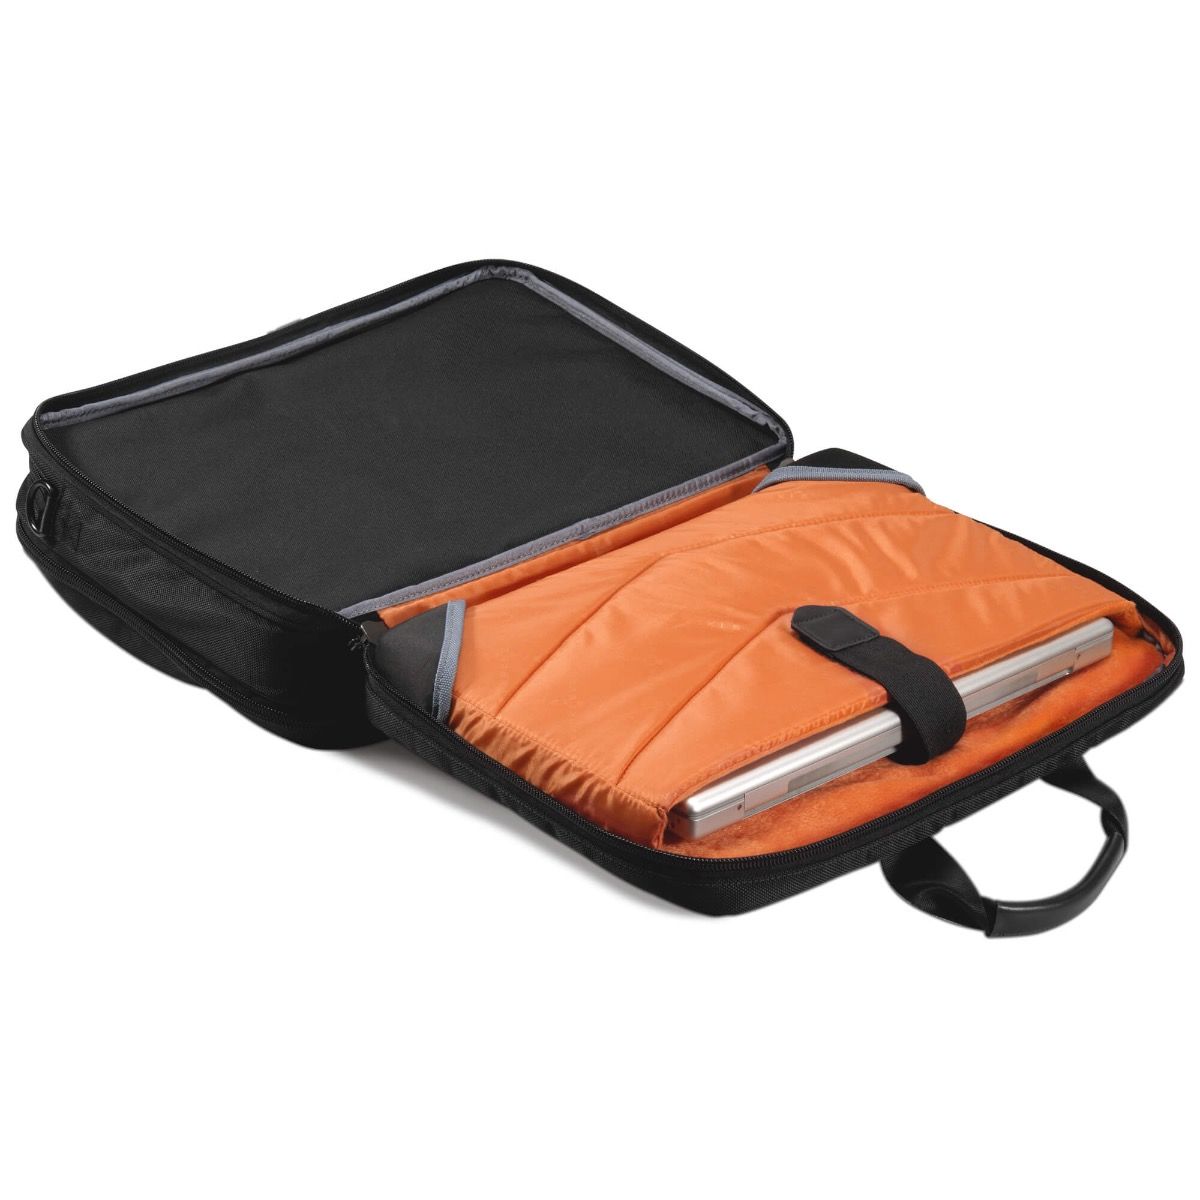 Versa Premium Travel Friendly Laptop Bag - Briefcase, up to 16 